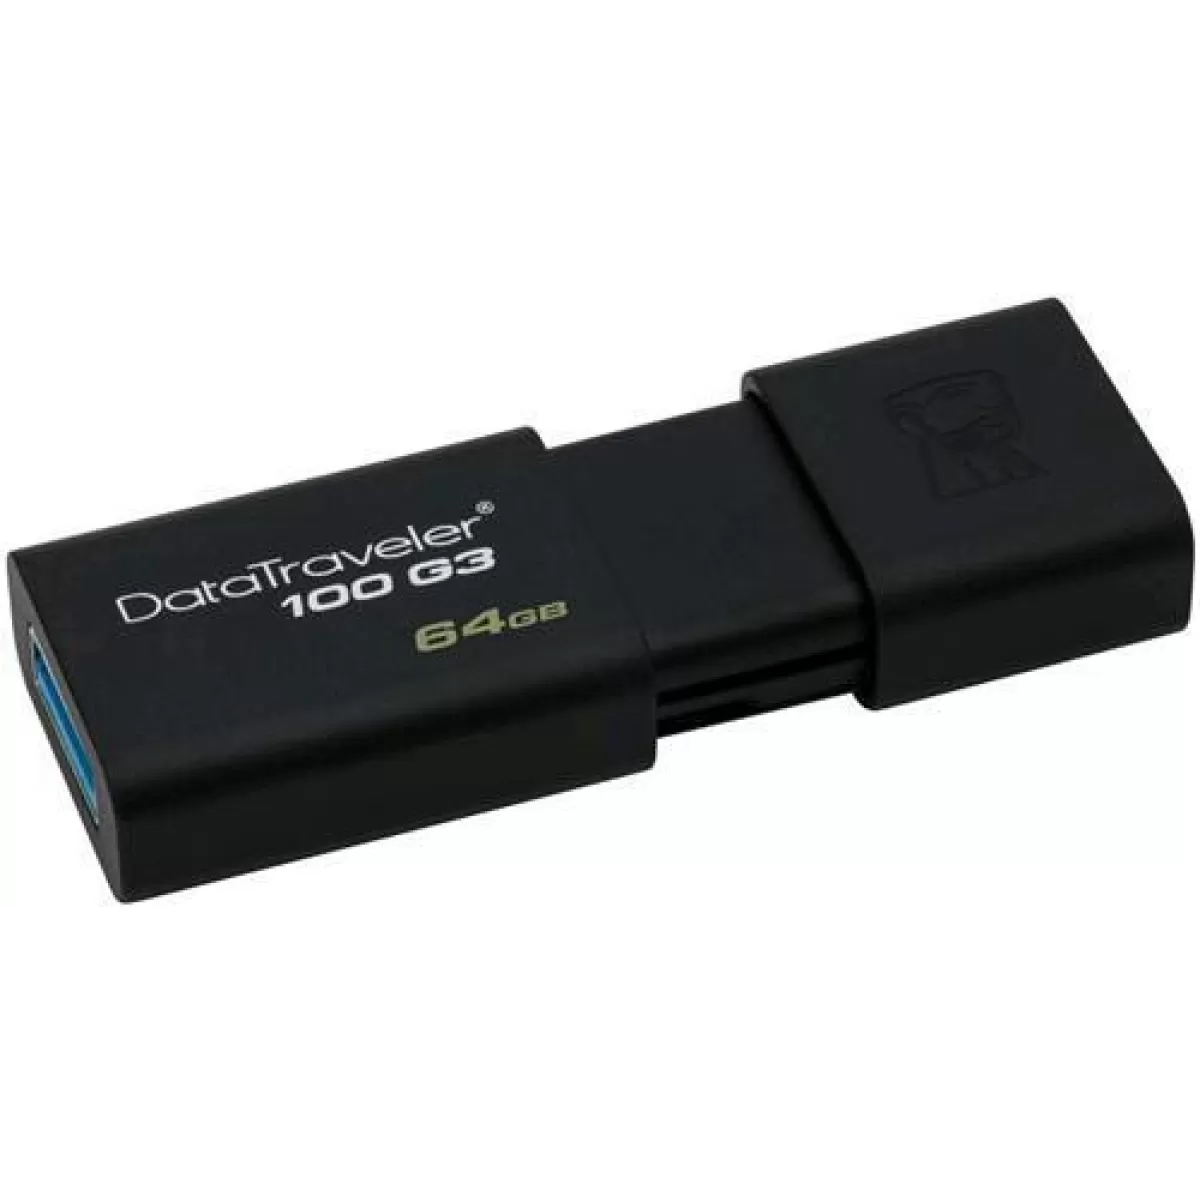 USB памет 64GB USB KINGSTON DT100G3